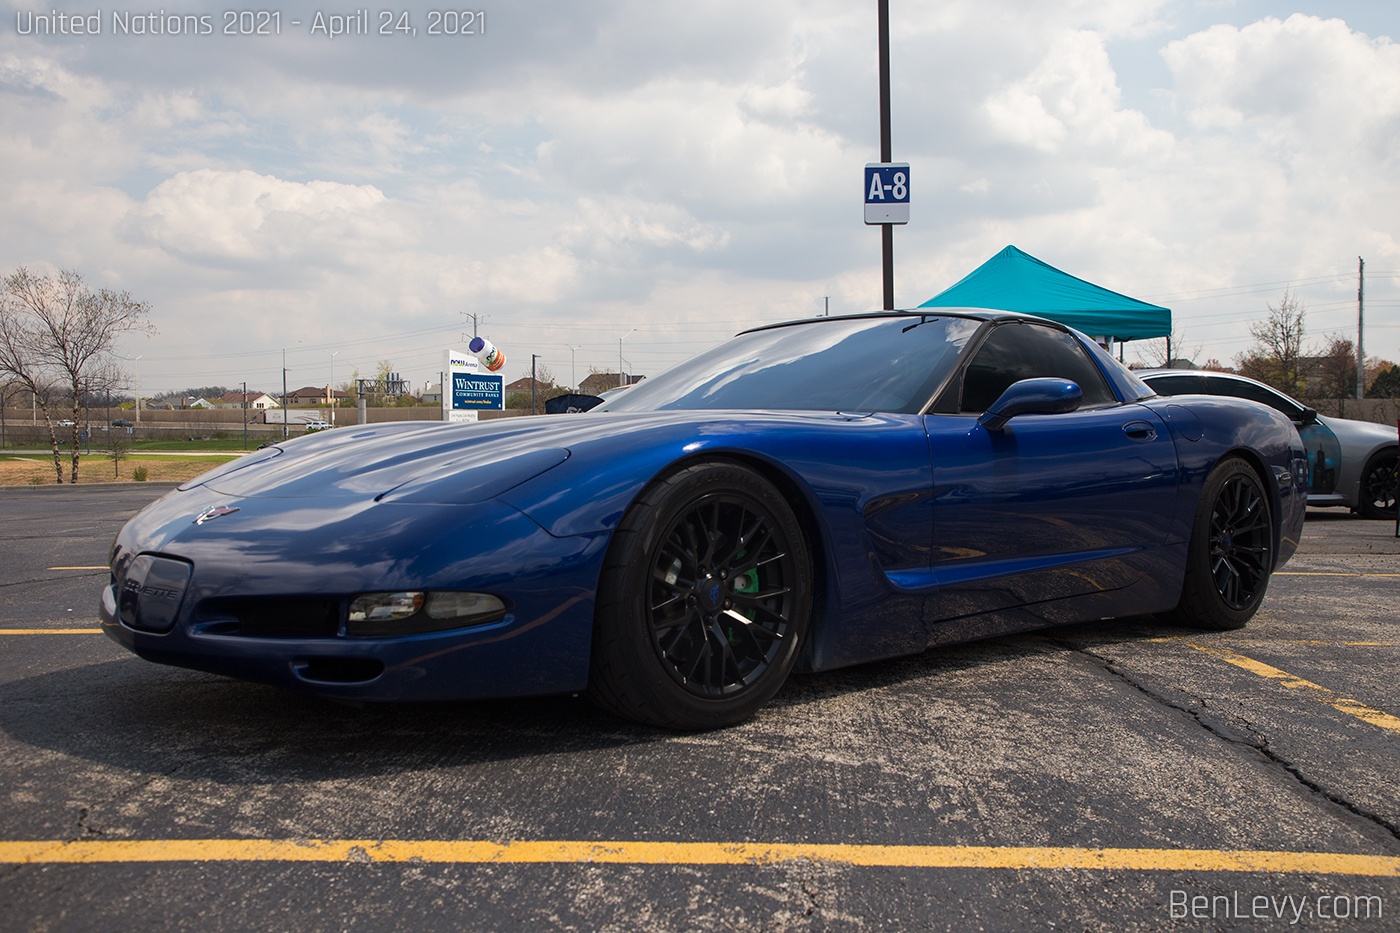 Blue C5 Corvette